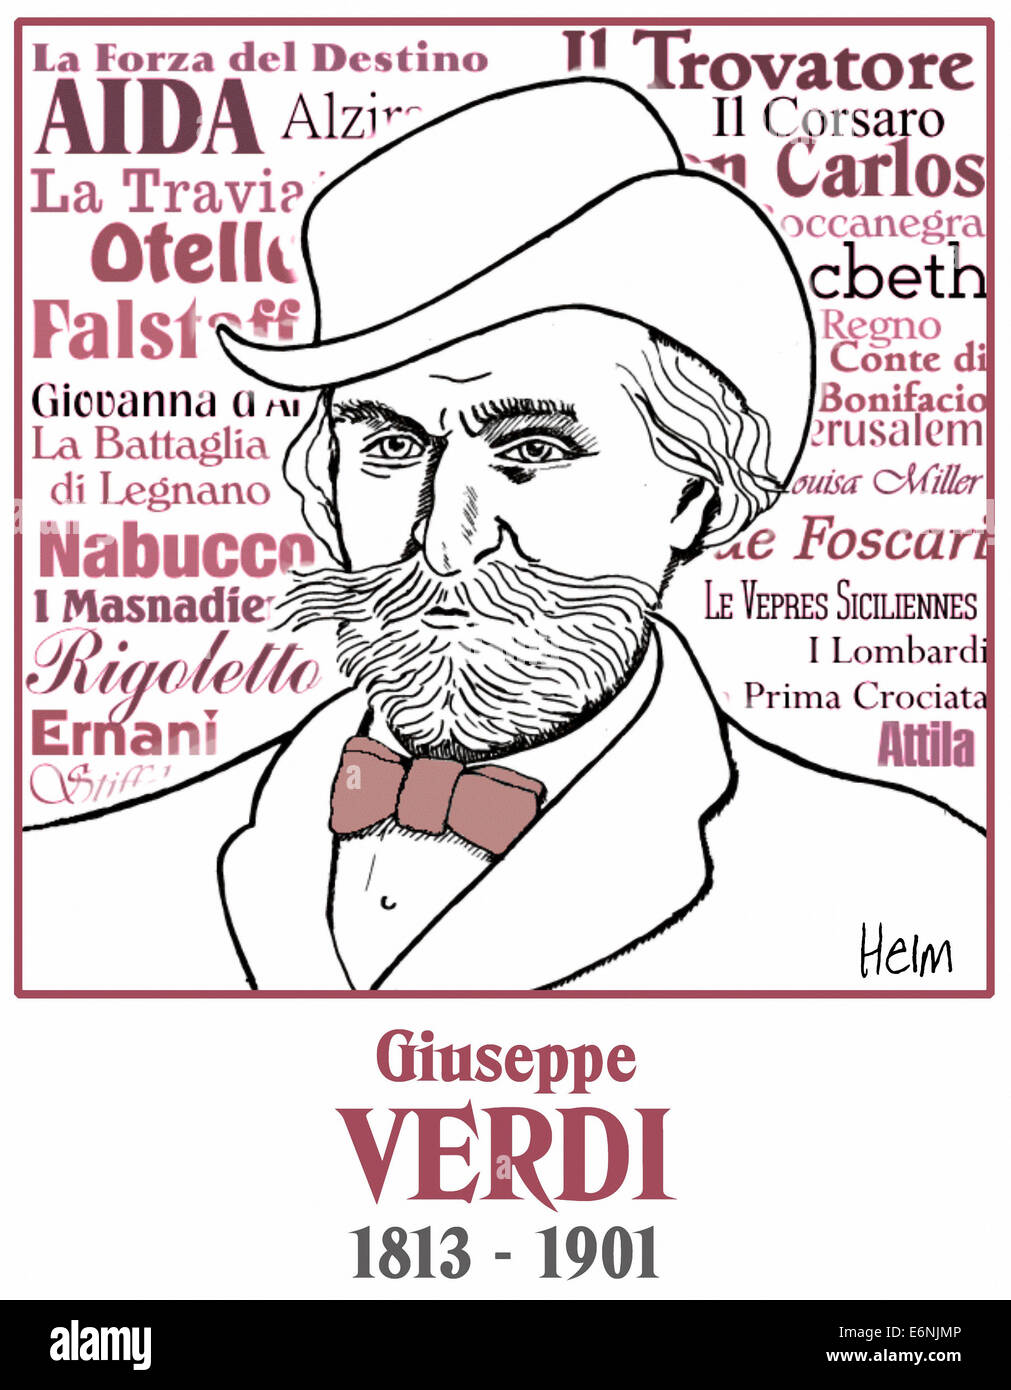 Giuseppe Verdi, Italian opera composer, portrait, 1813 - 1901 Stock Photo